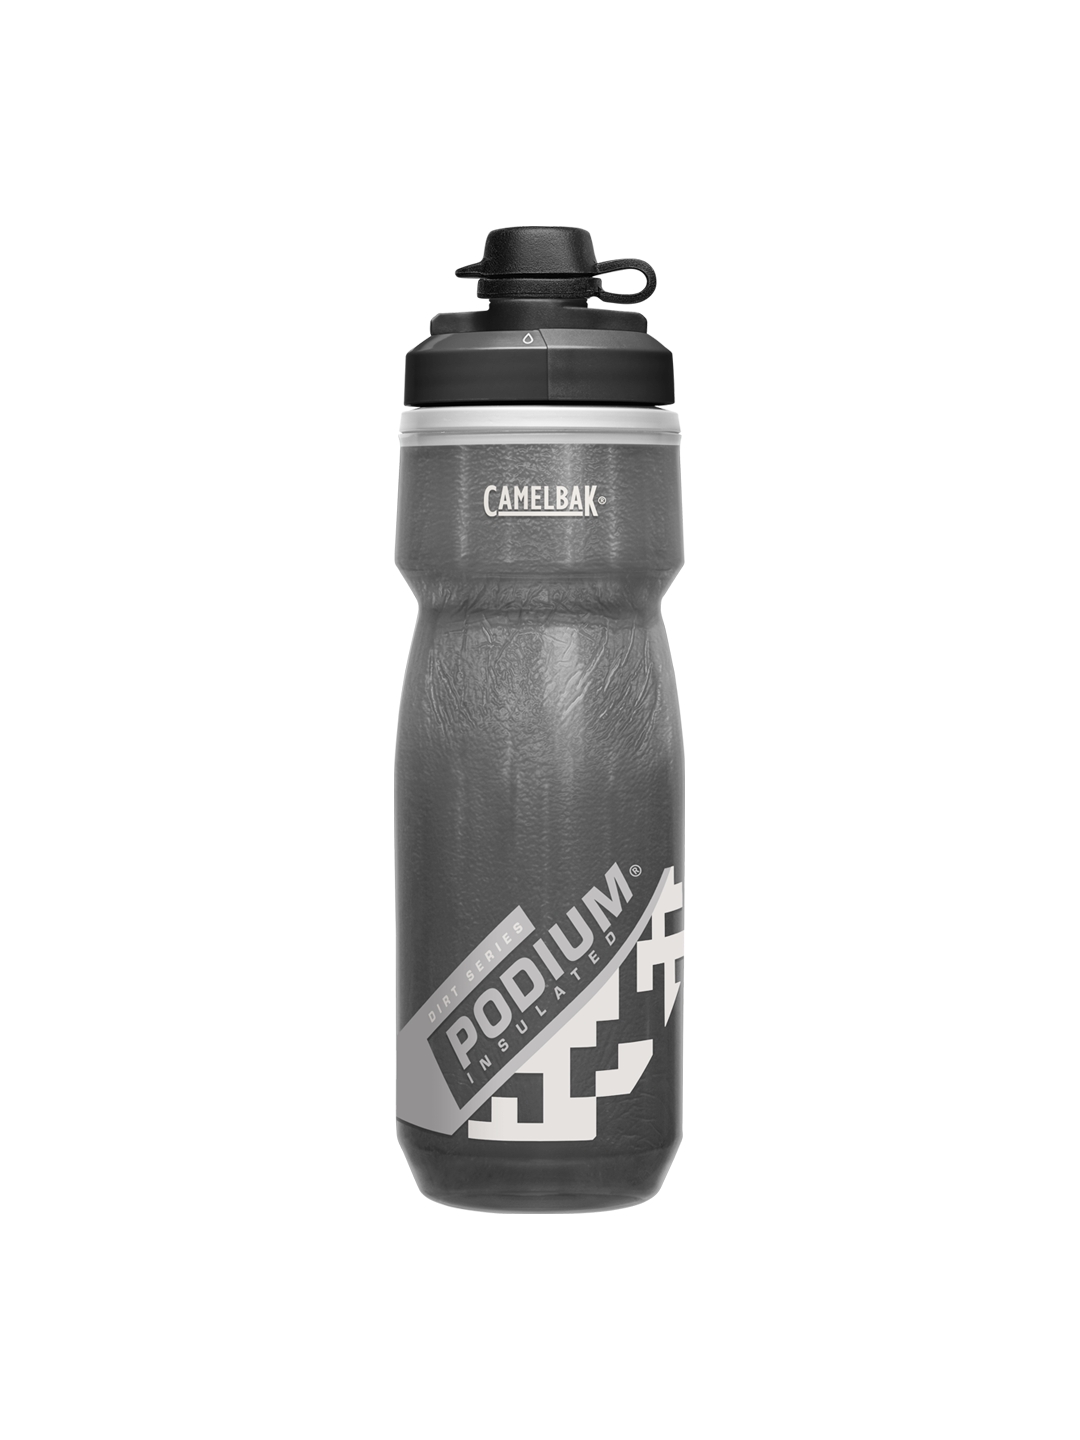 camelbak podium chill insulated water bottle